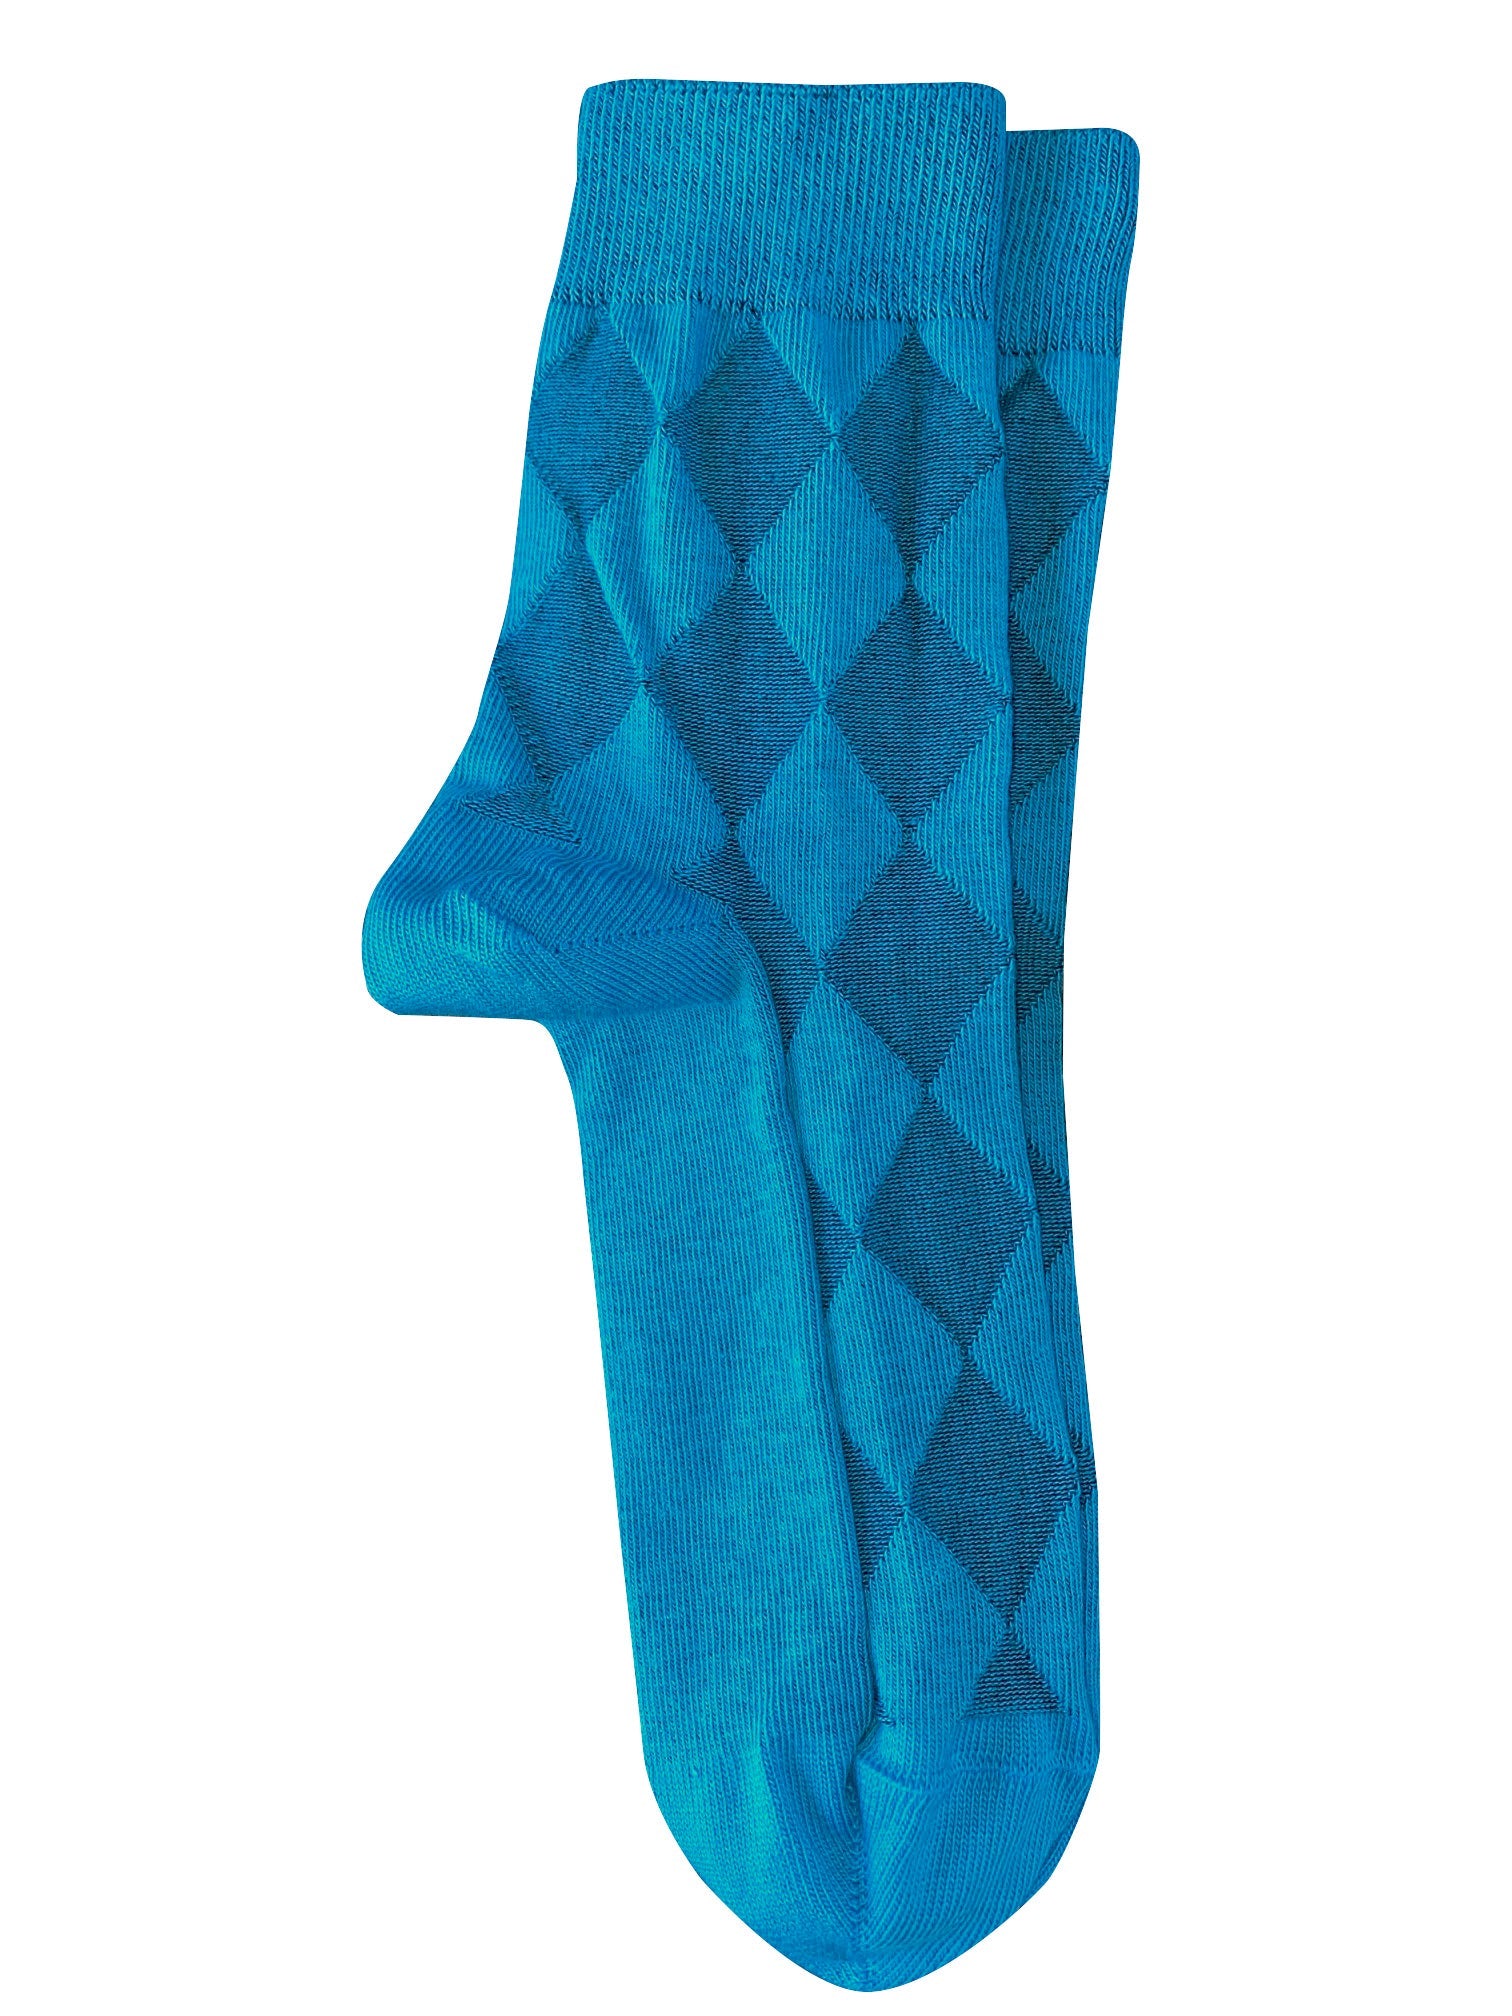 Cotton Aussie Made Socks (One Size) - Tightology socks Tightology Blue Short Jester